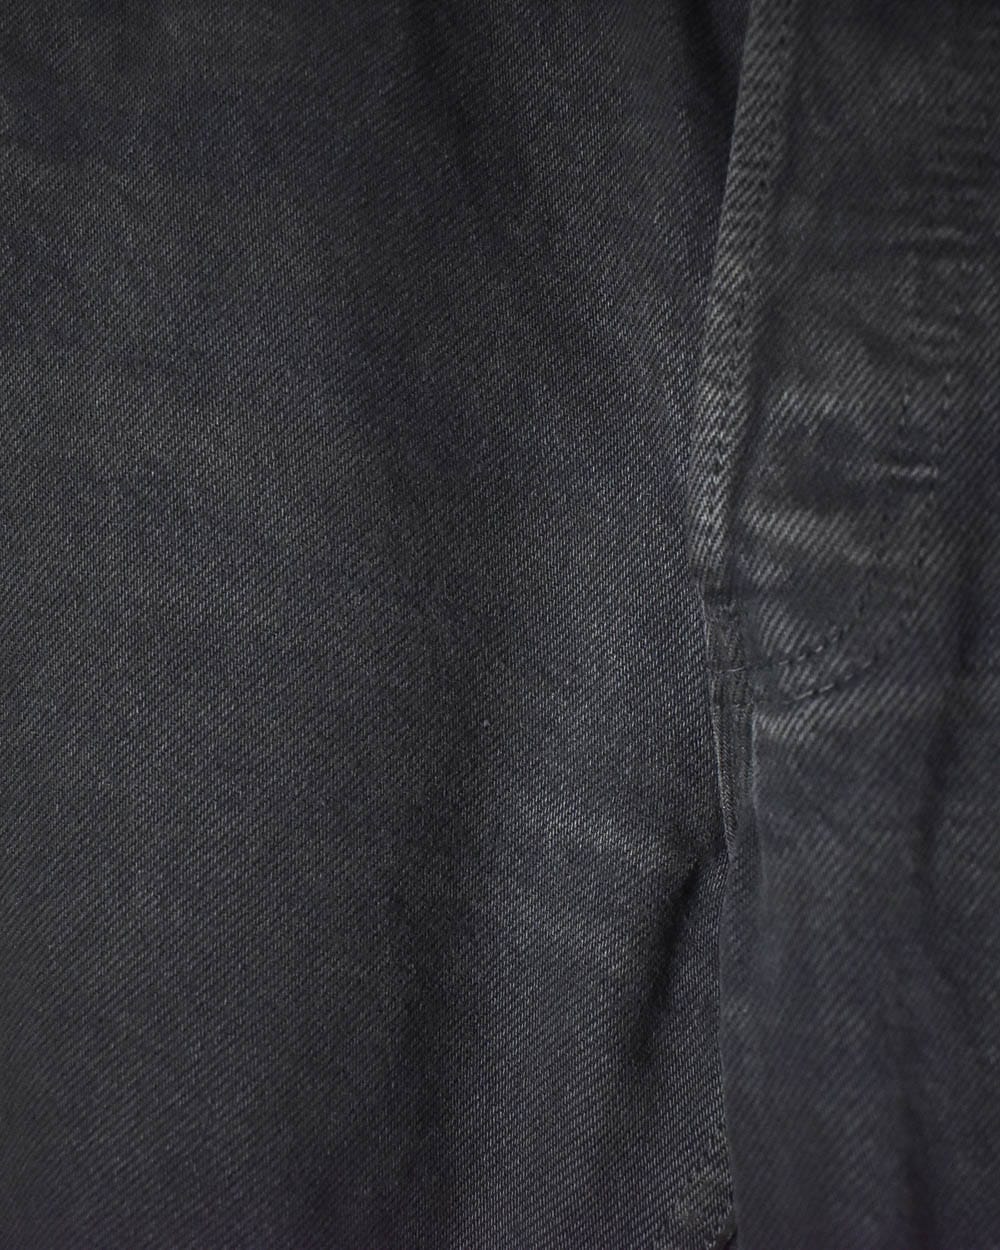 Black Levi's 501 Jeans - W29 L30